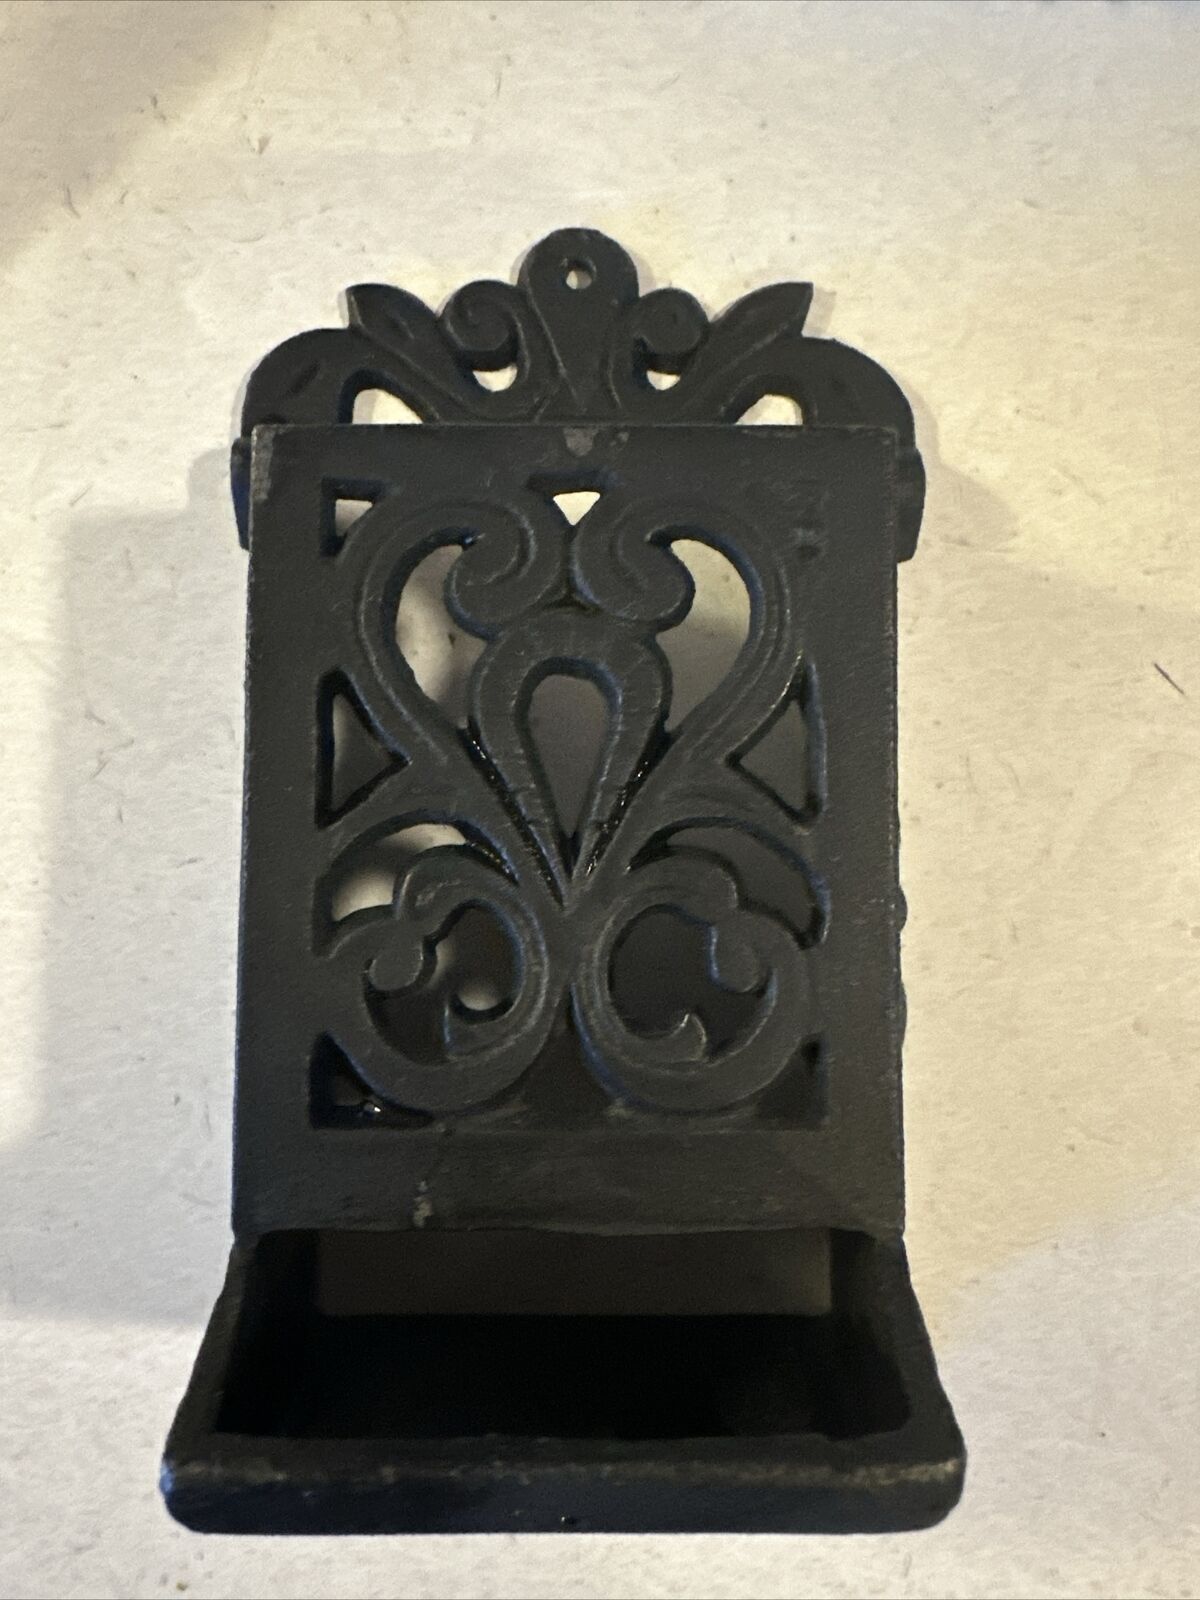 Vintage Black Ornate Cast Iron Wall Mount Match Box Holder Dispenser Farm Decor